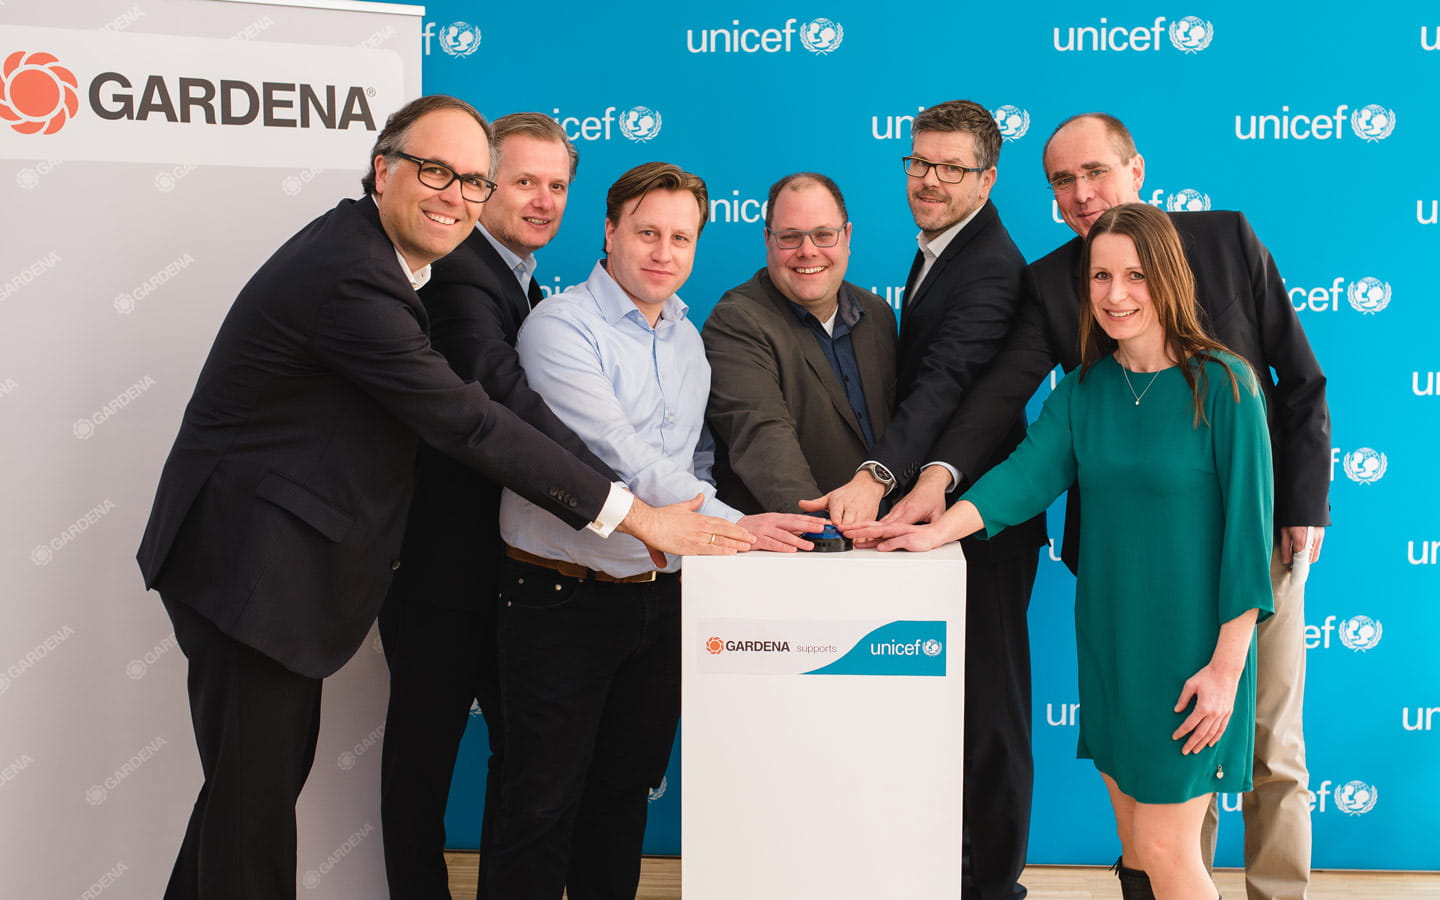 Start of partnership between GARDENA and UNICEF